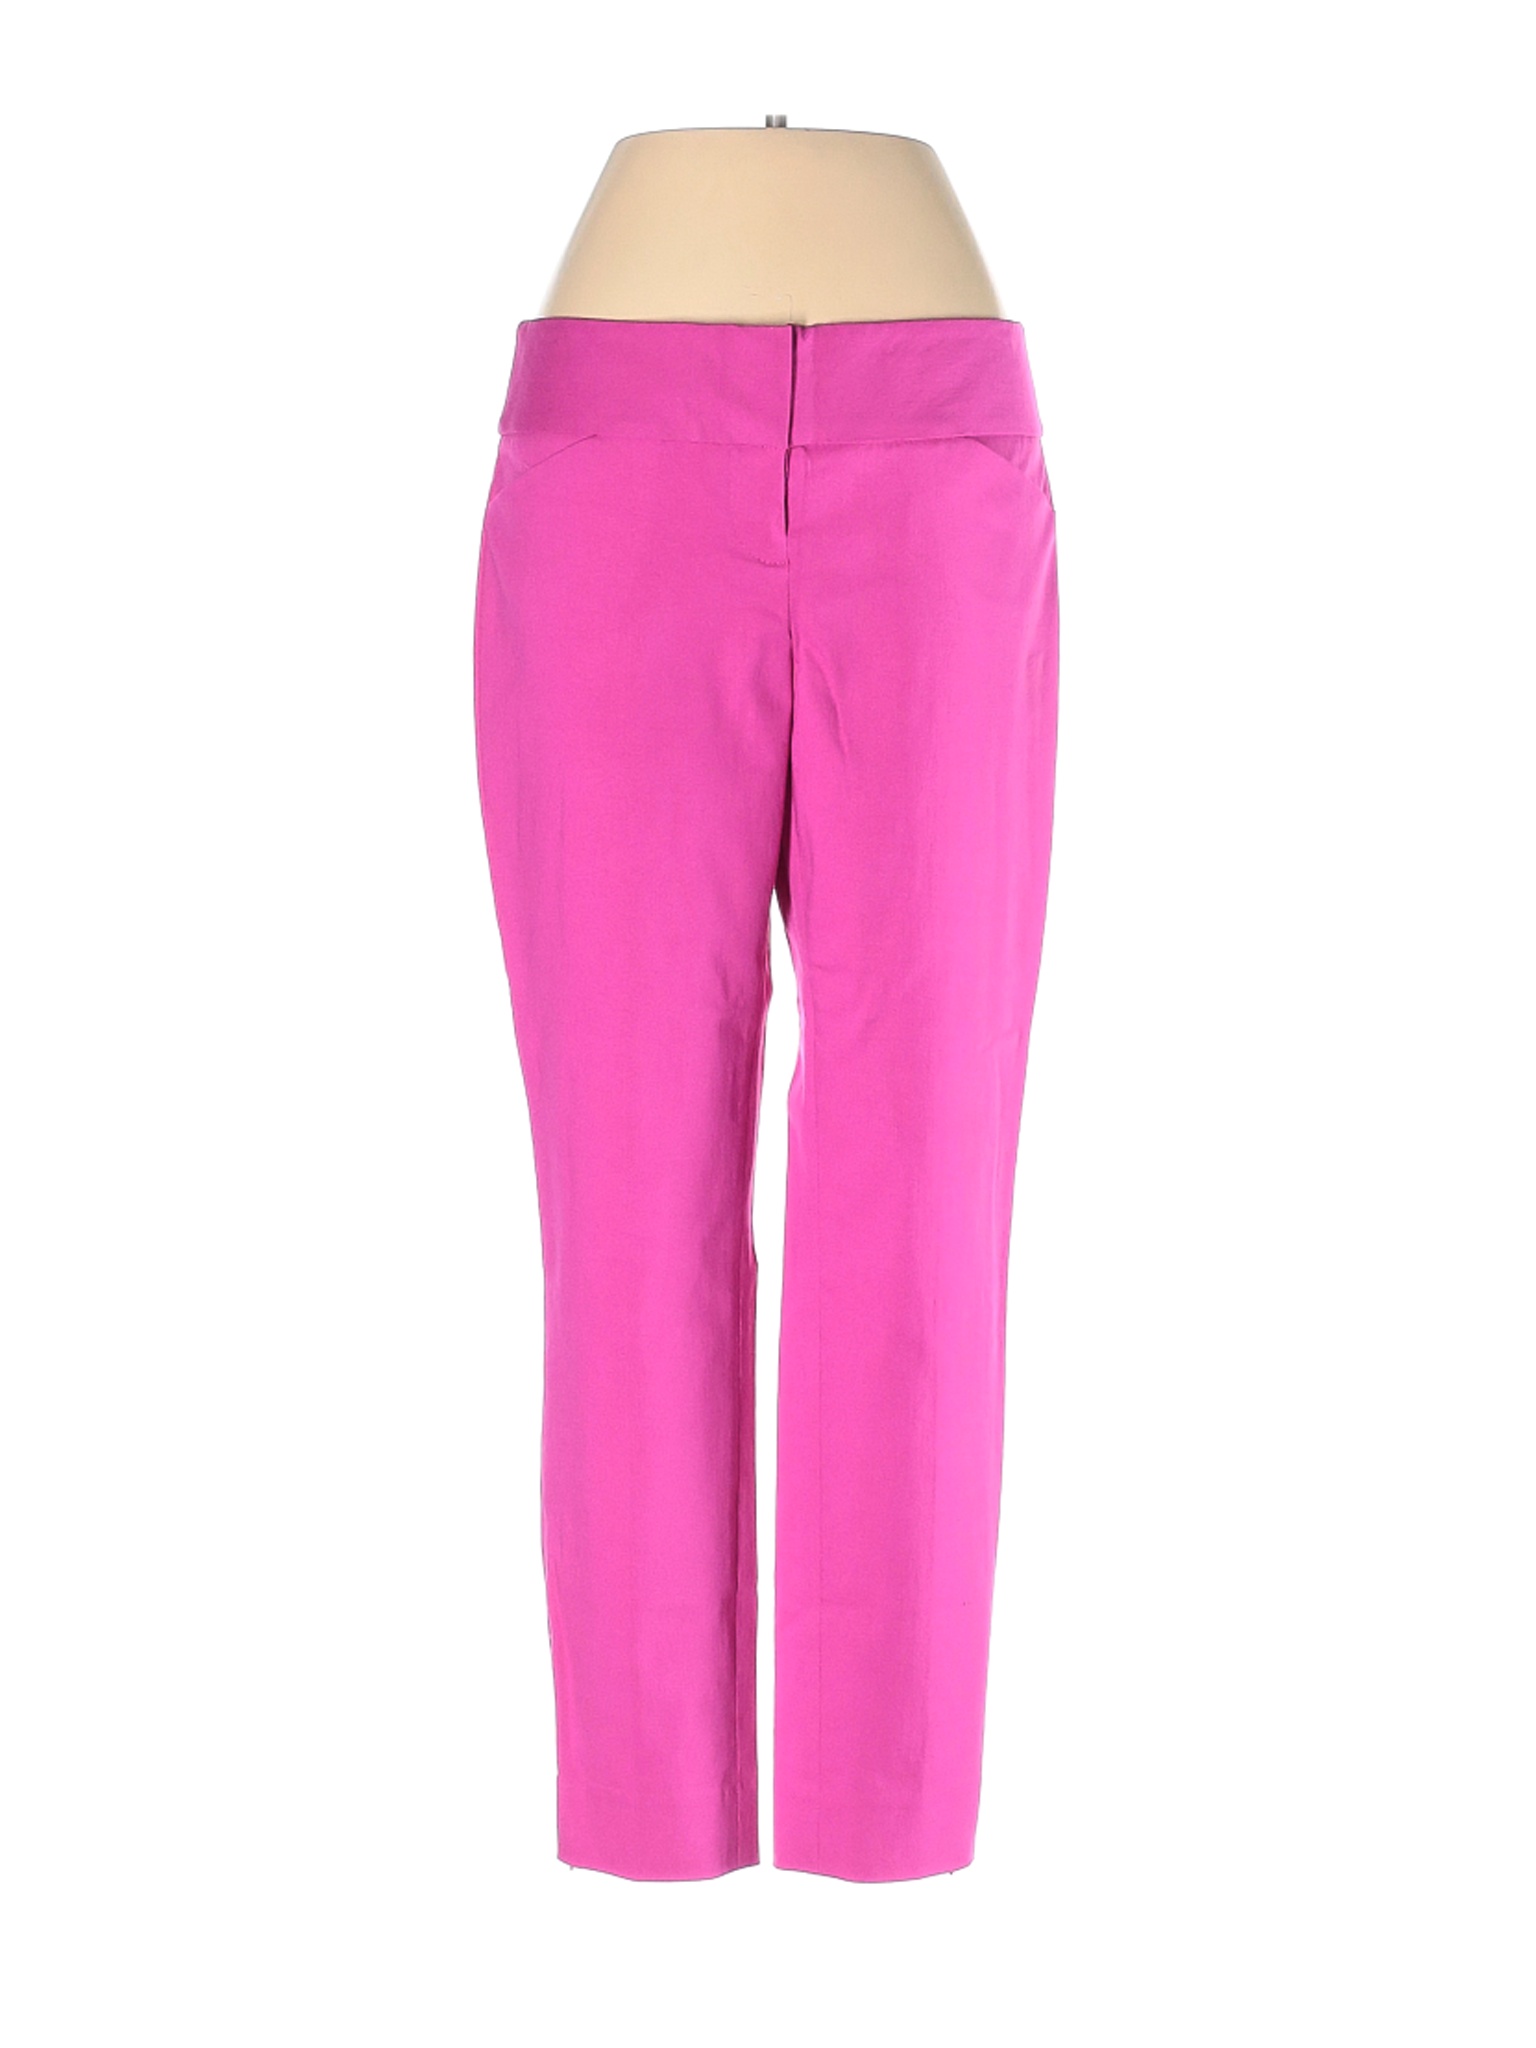 The Limited Women Pink Dress Pants 2 | eBay